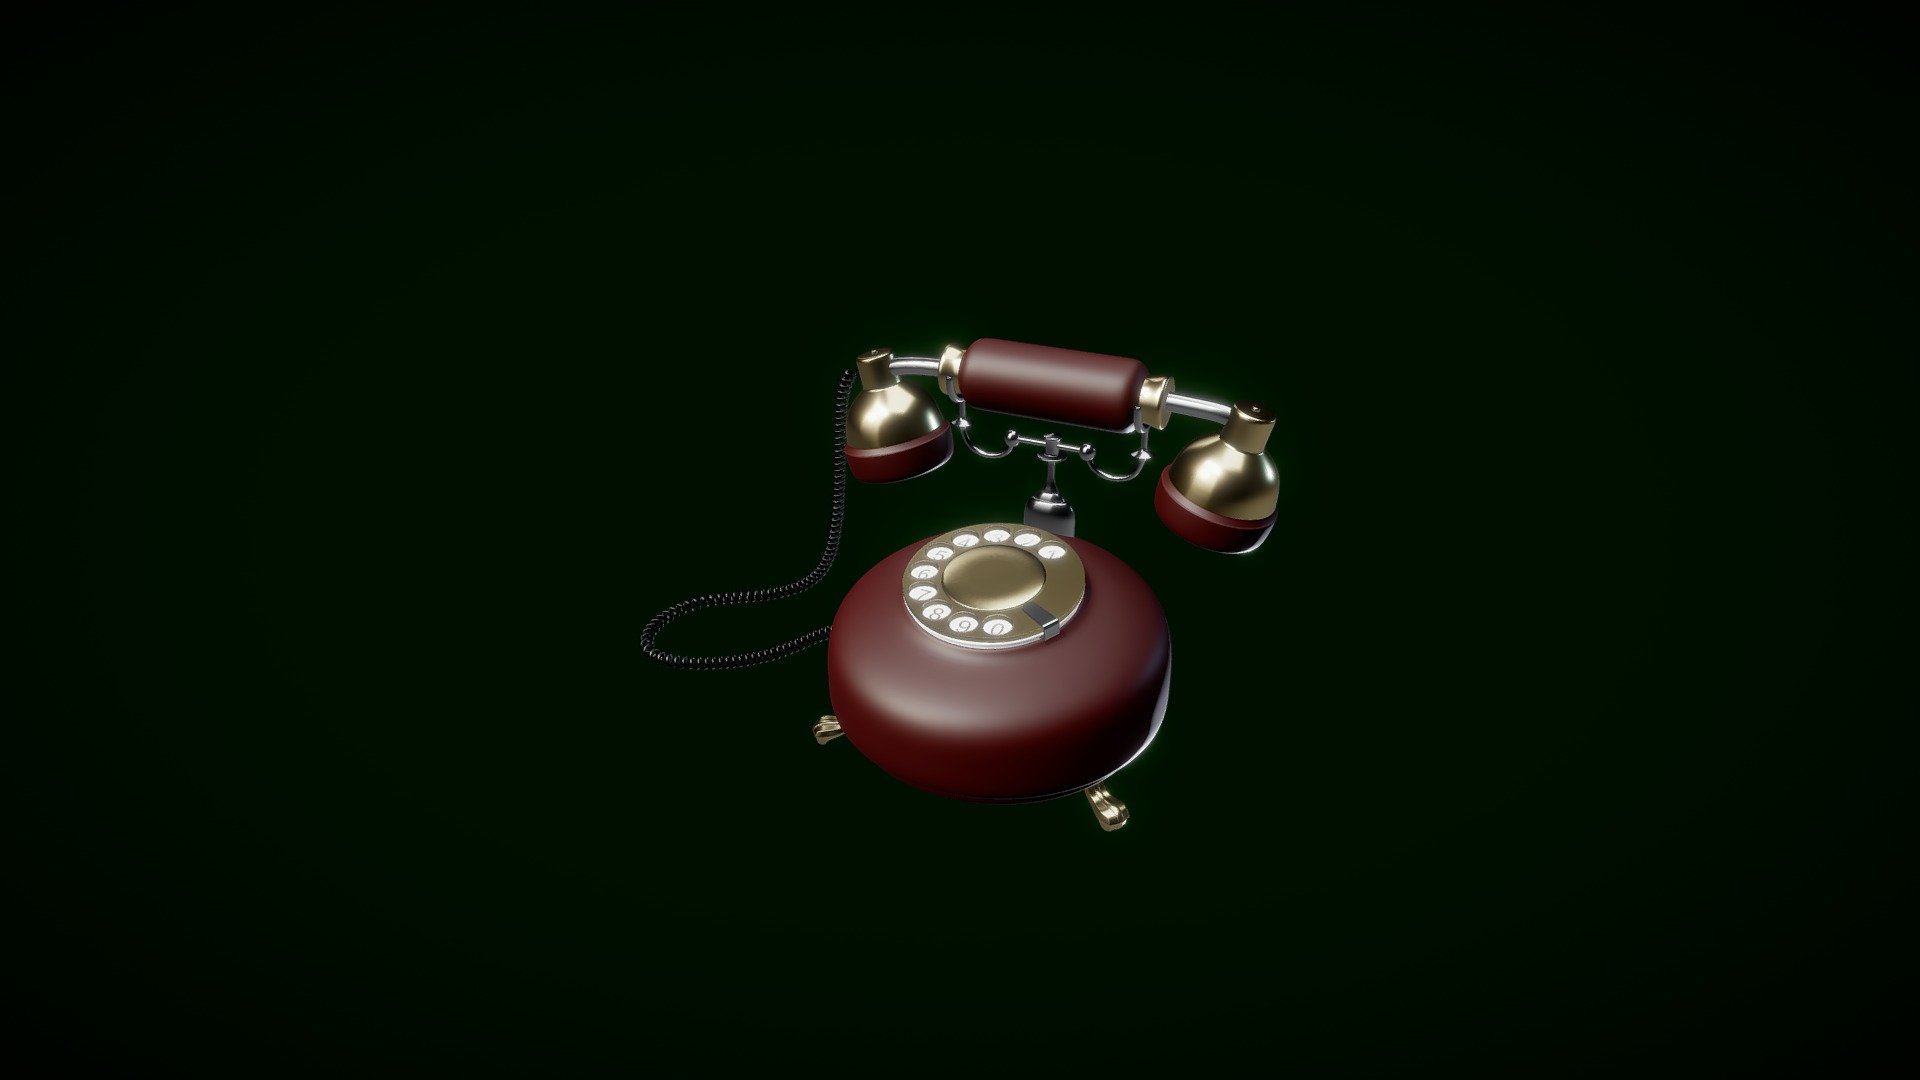 Retro phone in dark red